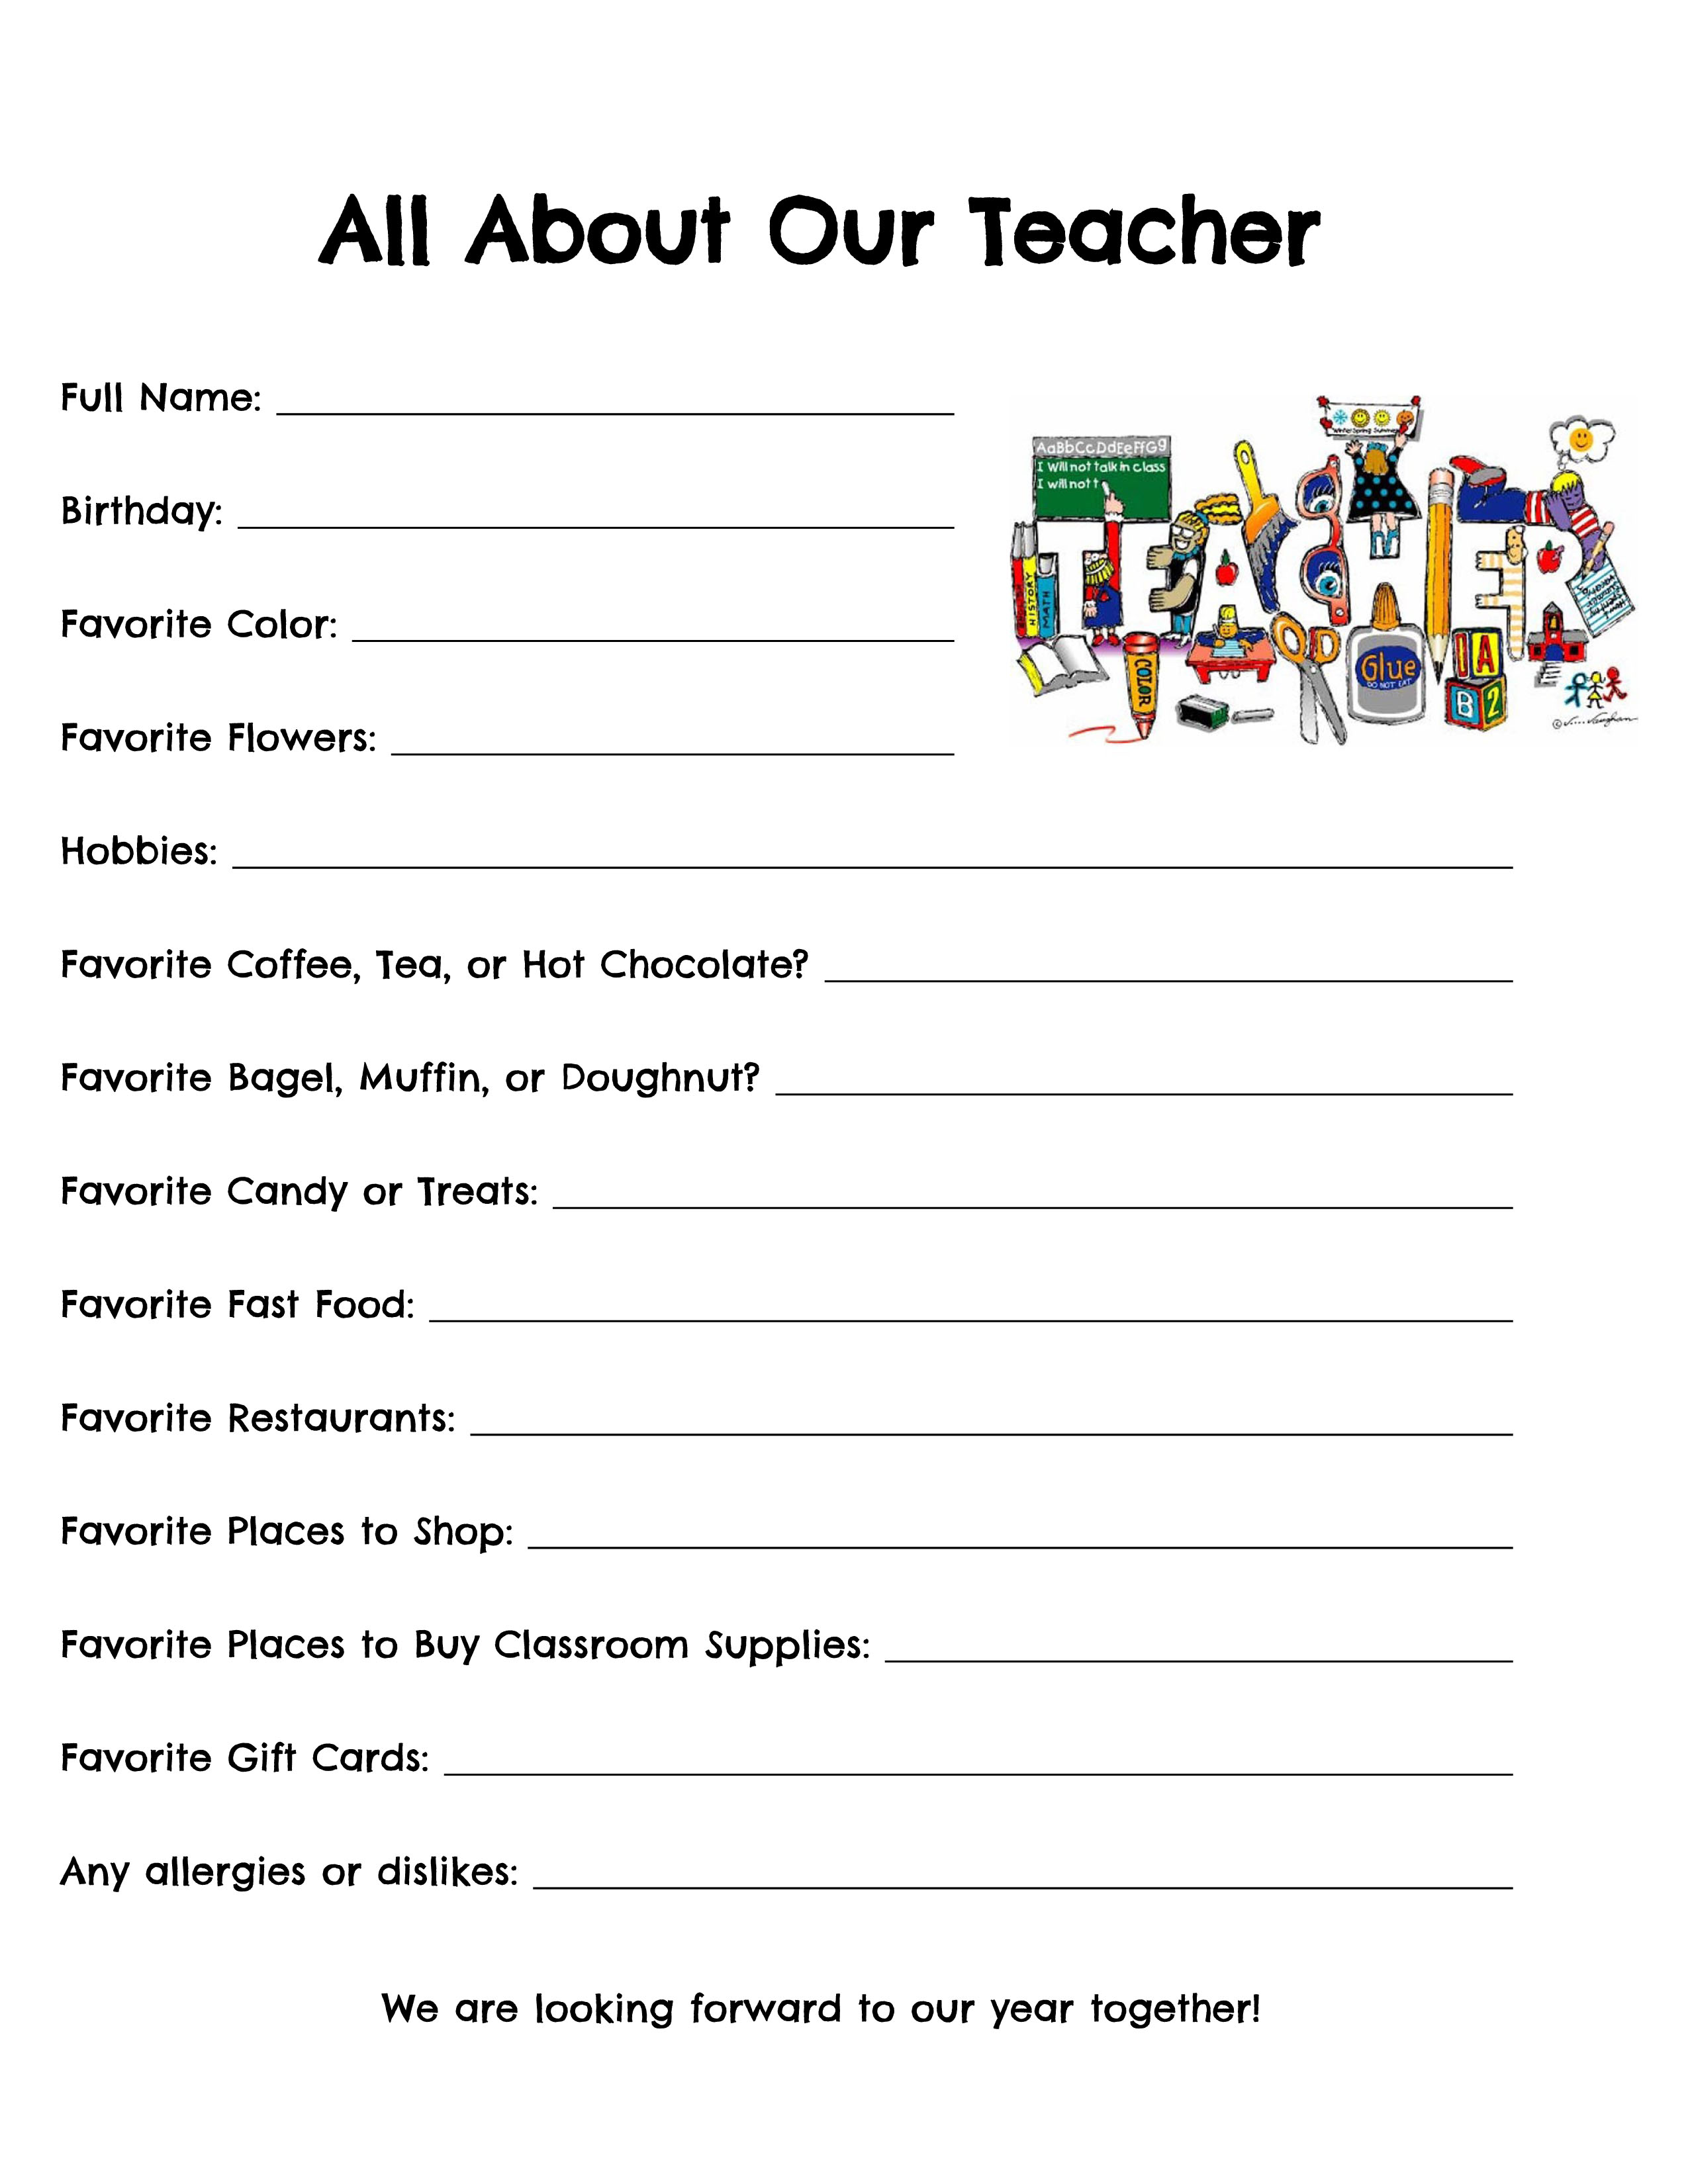 teacher-questionnaire-celebrating-holidays